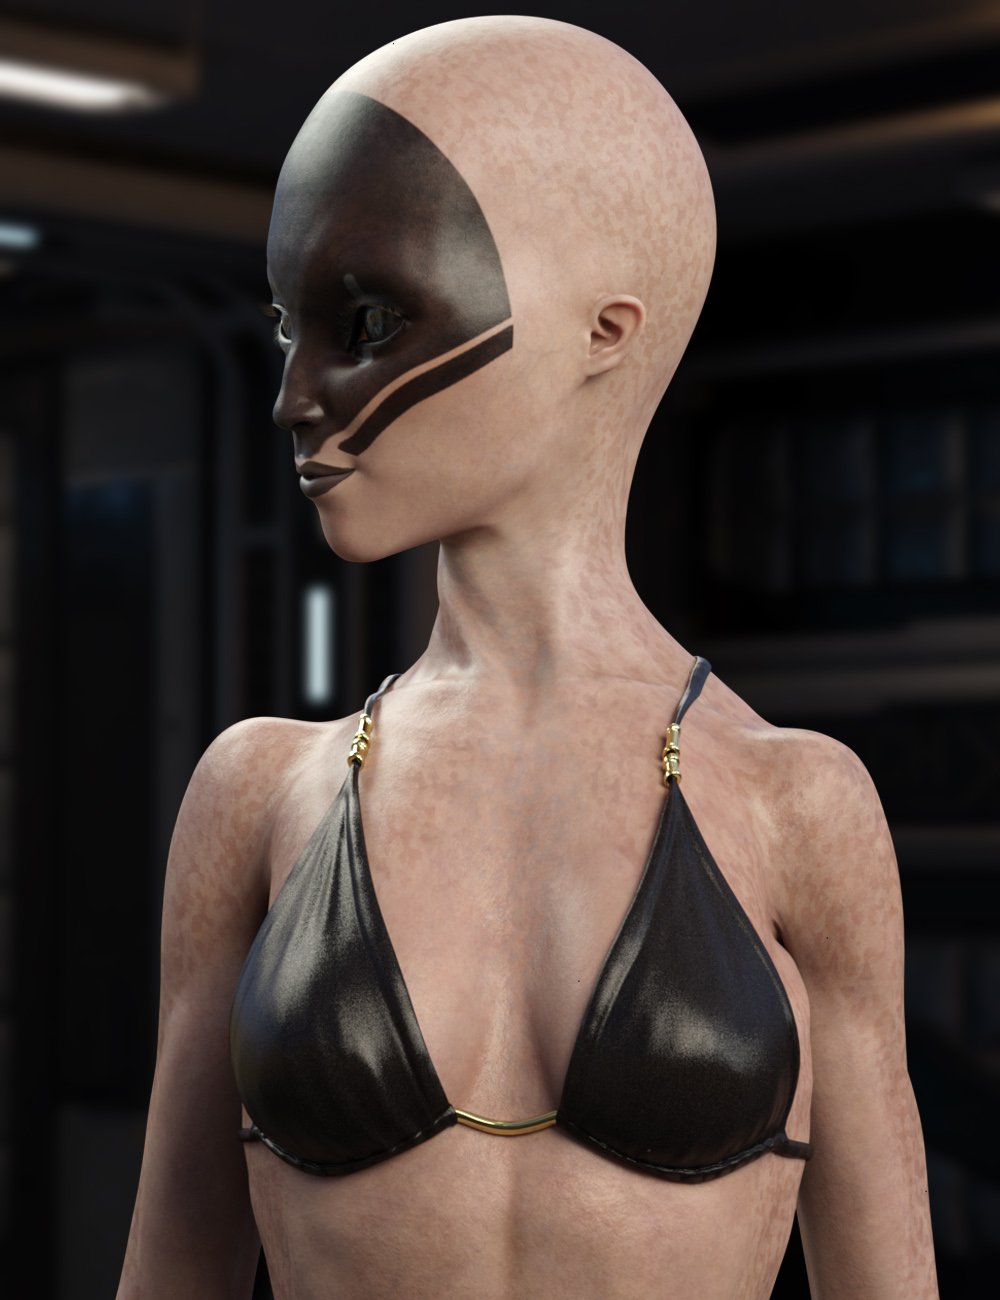 HyGrey for Genesis 8.1 Female by: RawArt, 3D Models by Daz 3D